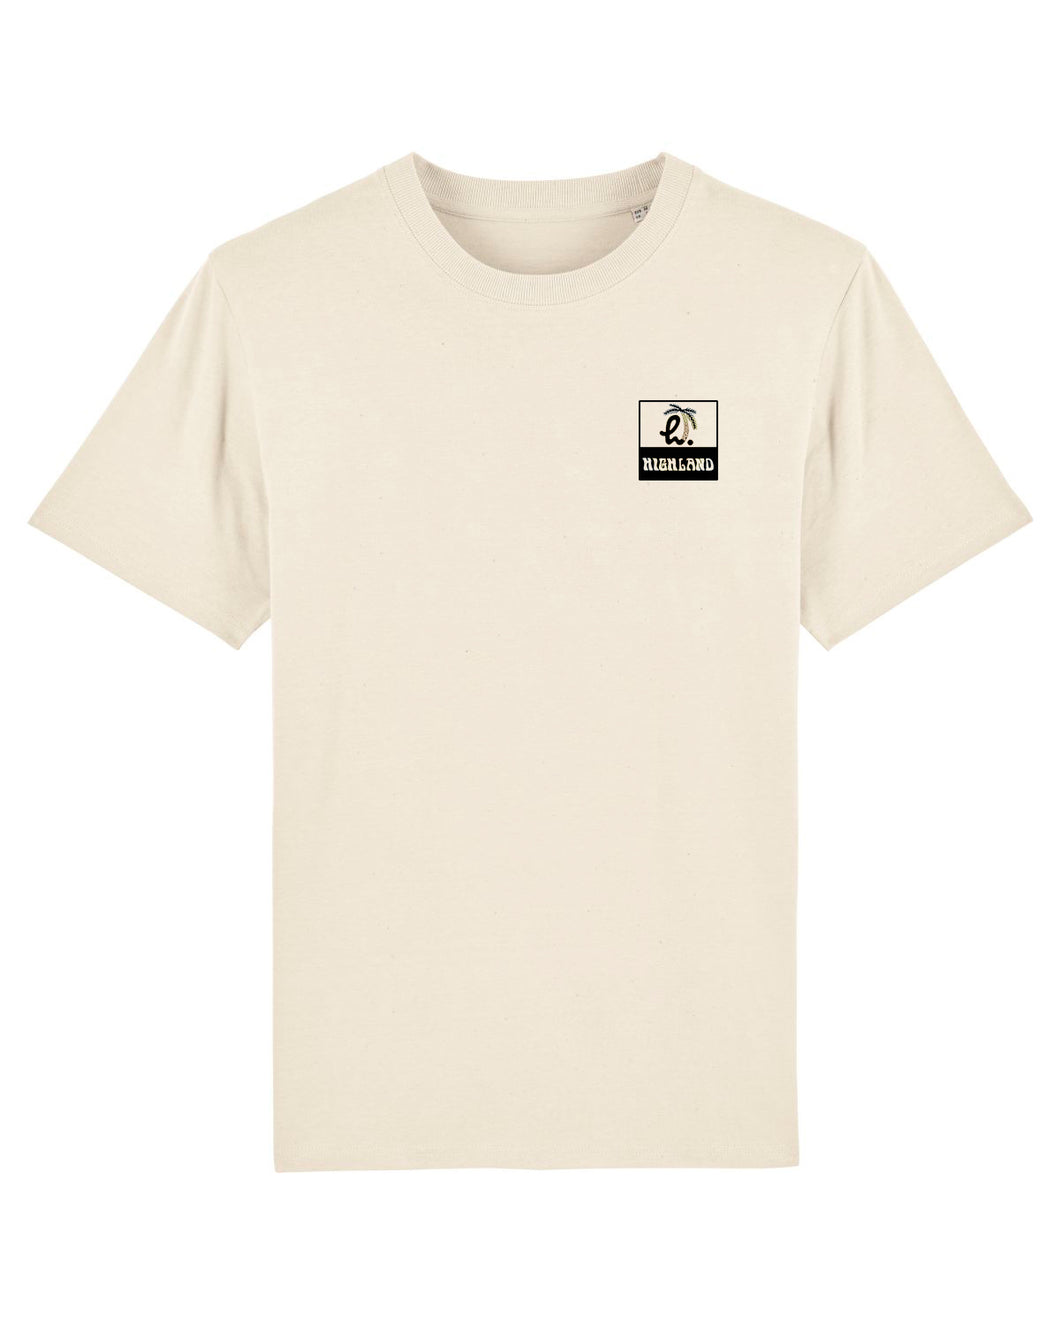 Highland Co. 2021 White T-Shirt - Box Logo